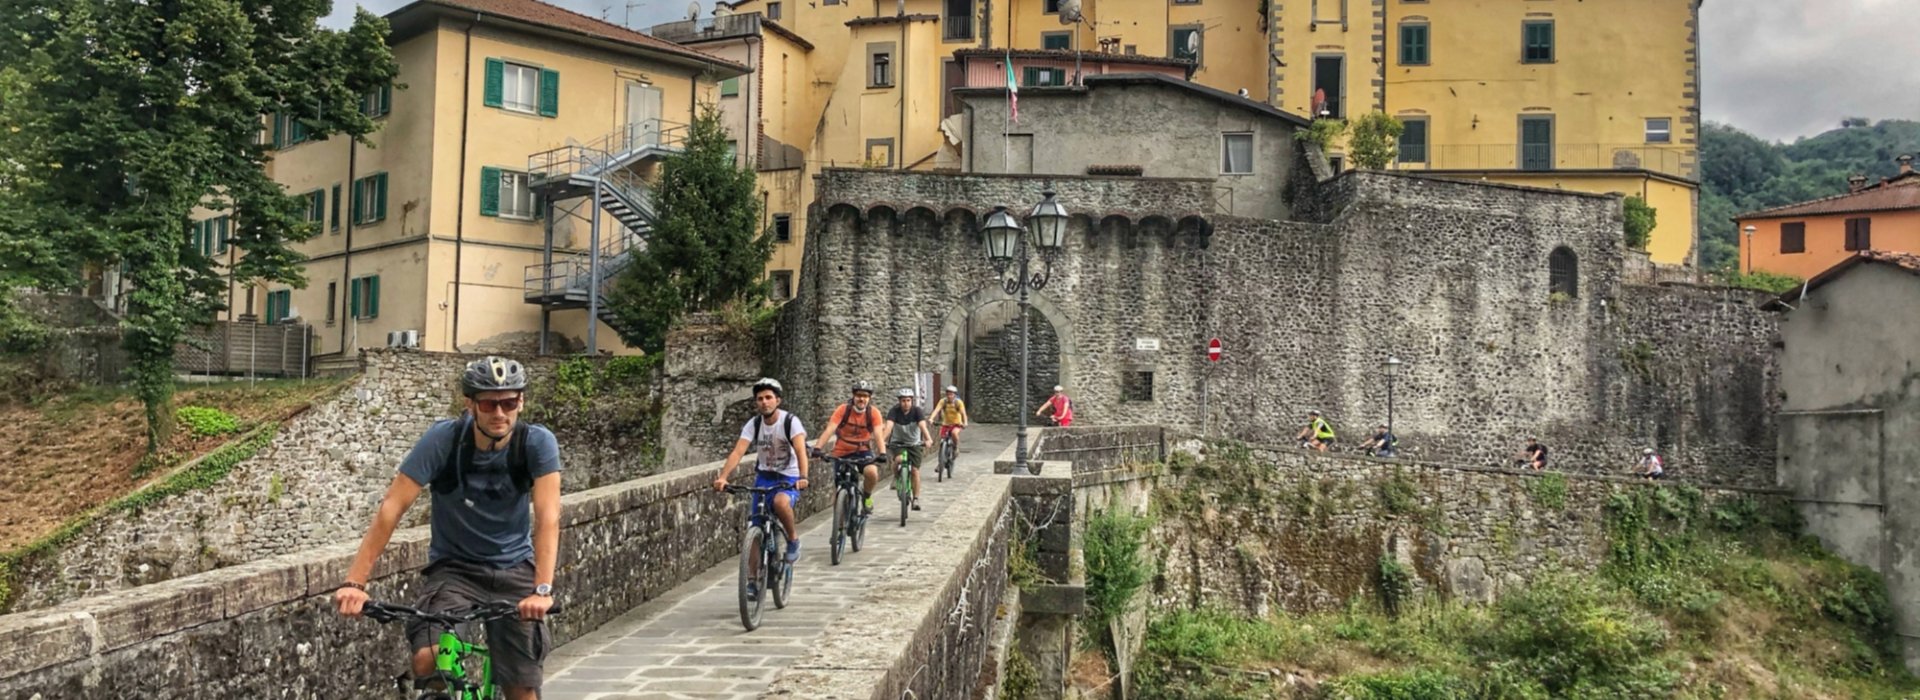 Garfagnana e-bike tour in Tuscany